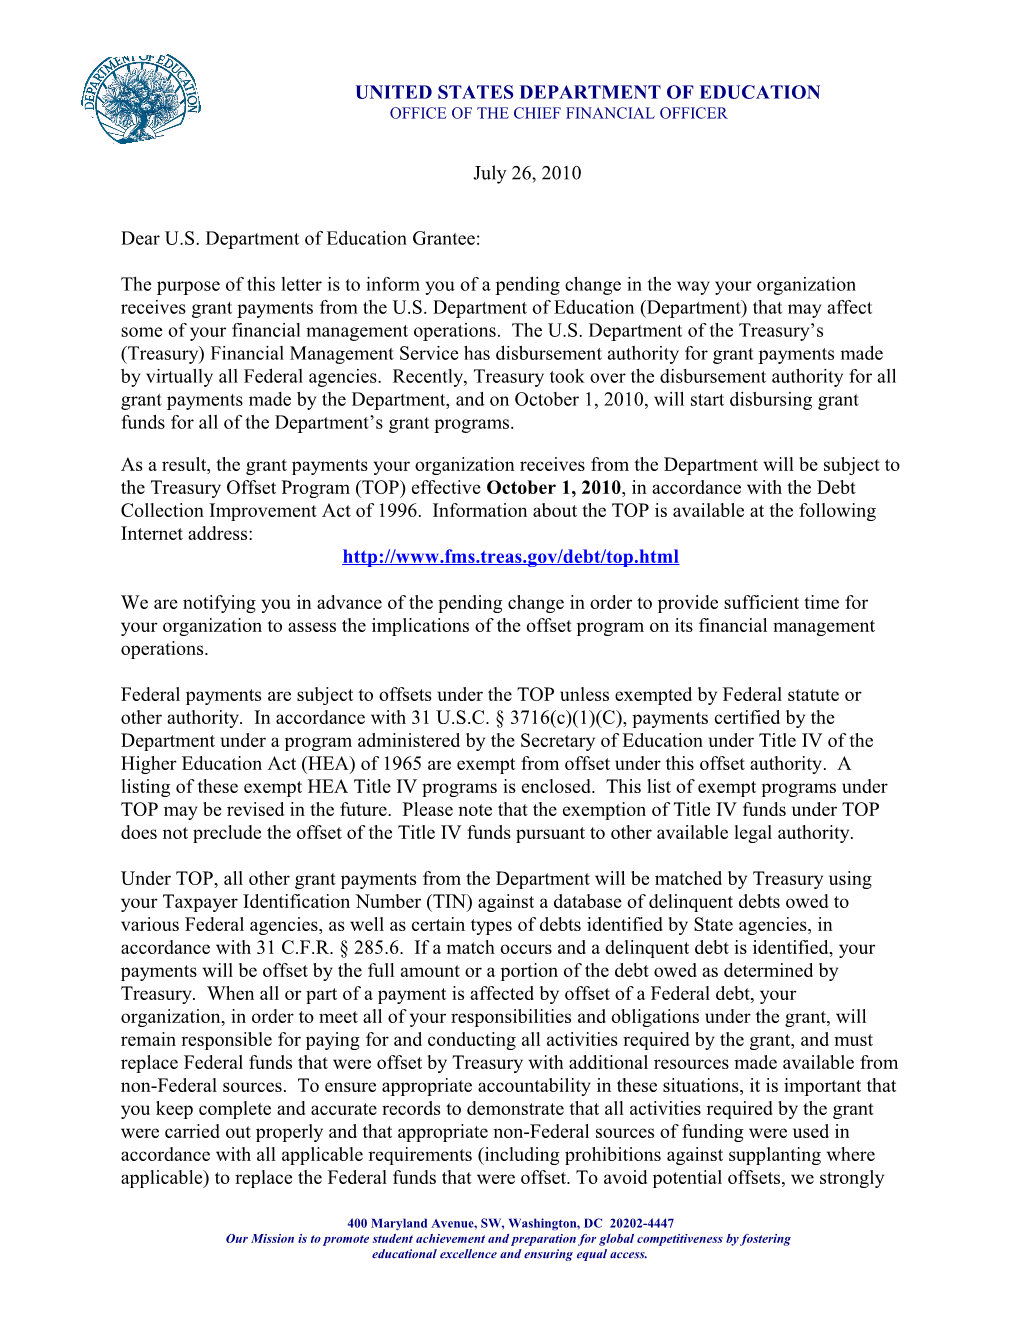 Treasury Offset Program Letter (MS Word)